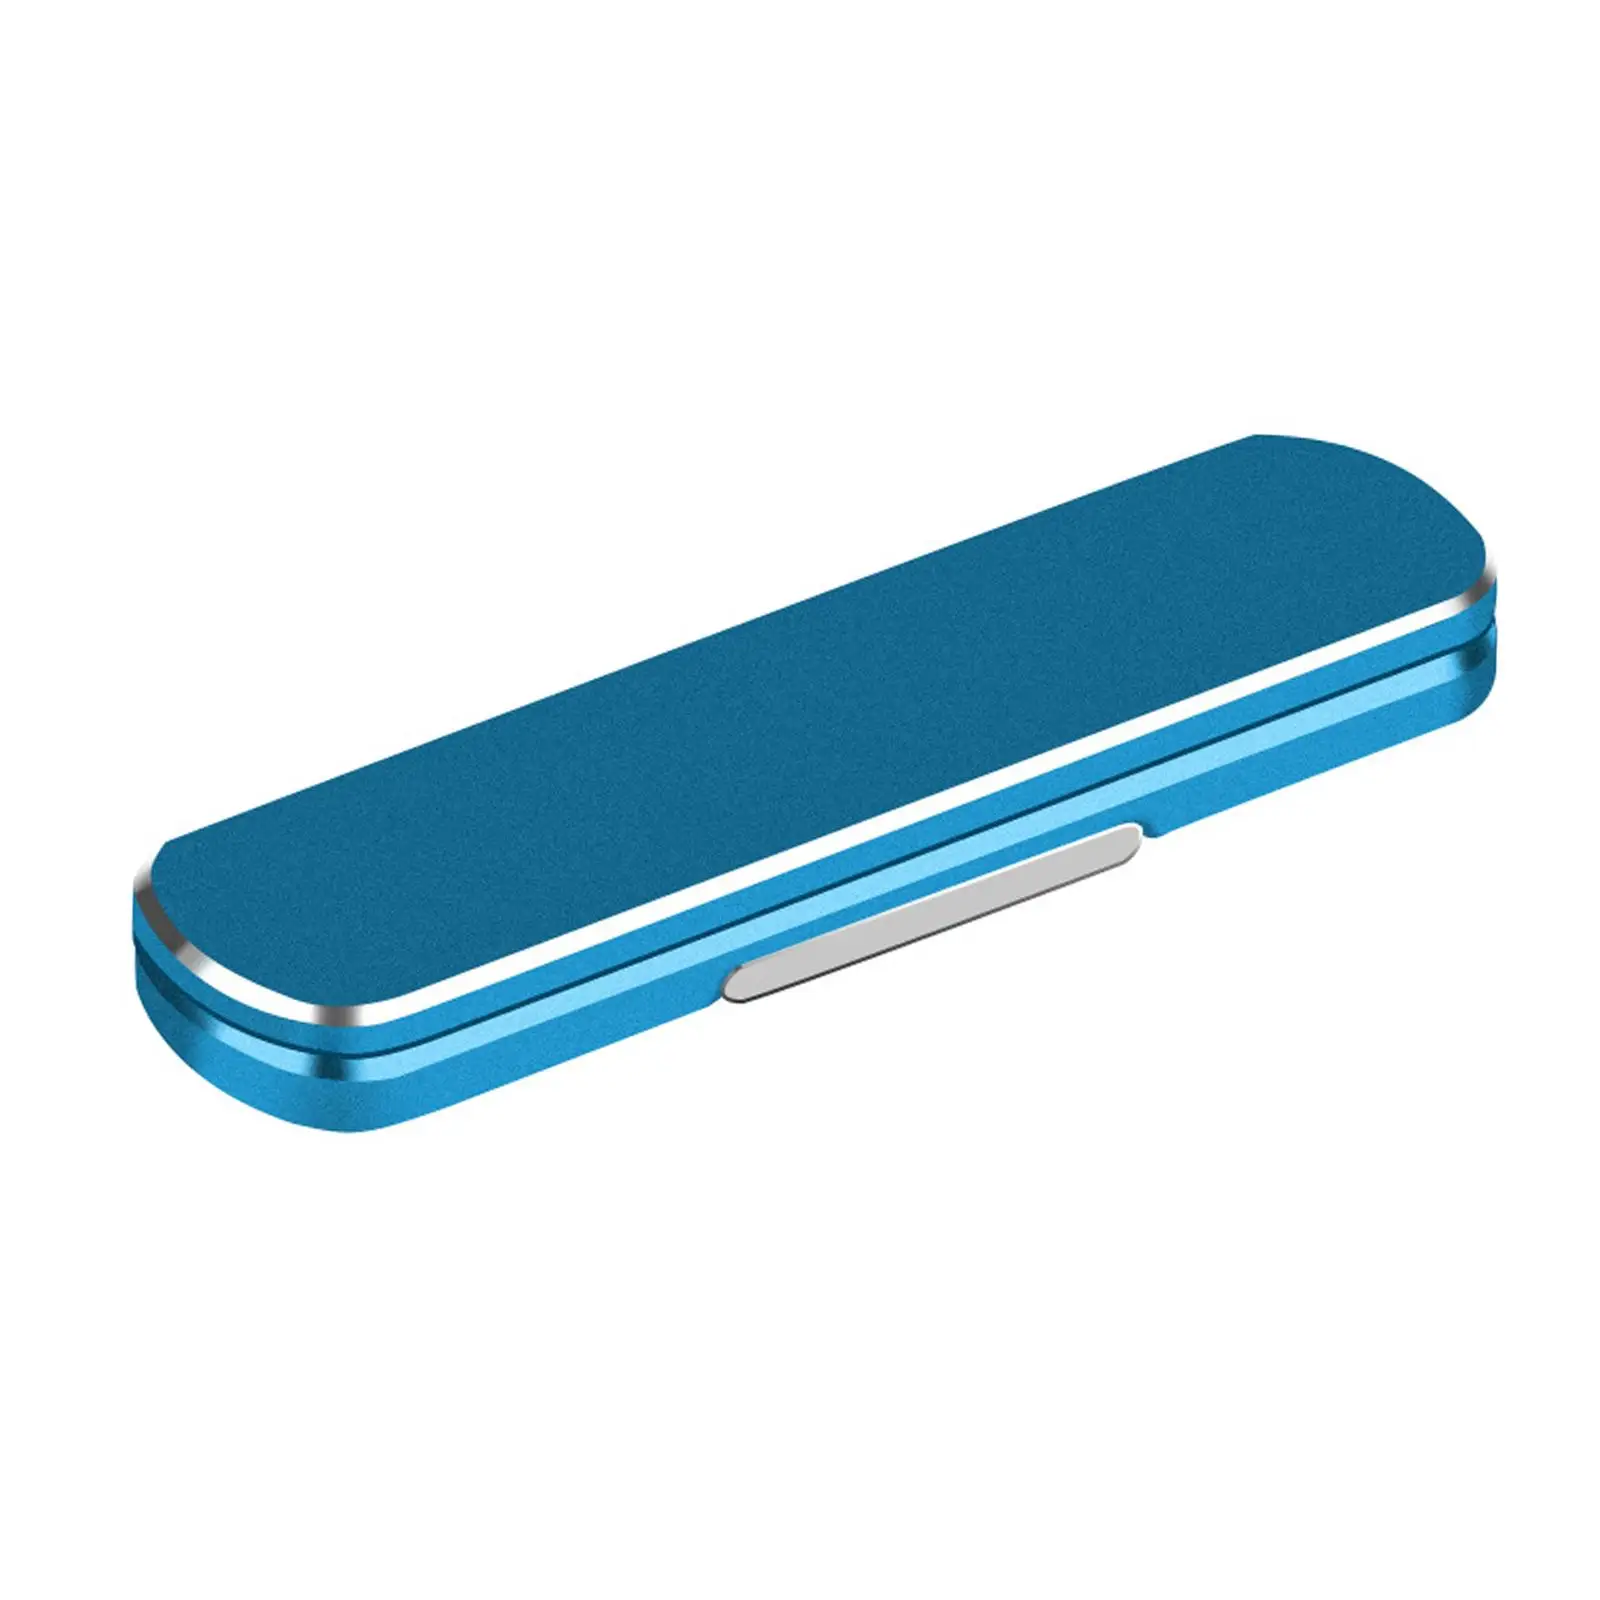 Portable Mobile Phone Stand Aluminum Alloy Pocket Size Adjustable for Desk Travel